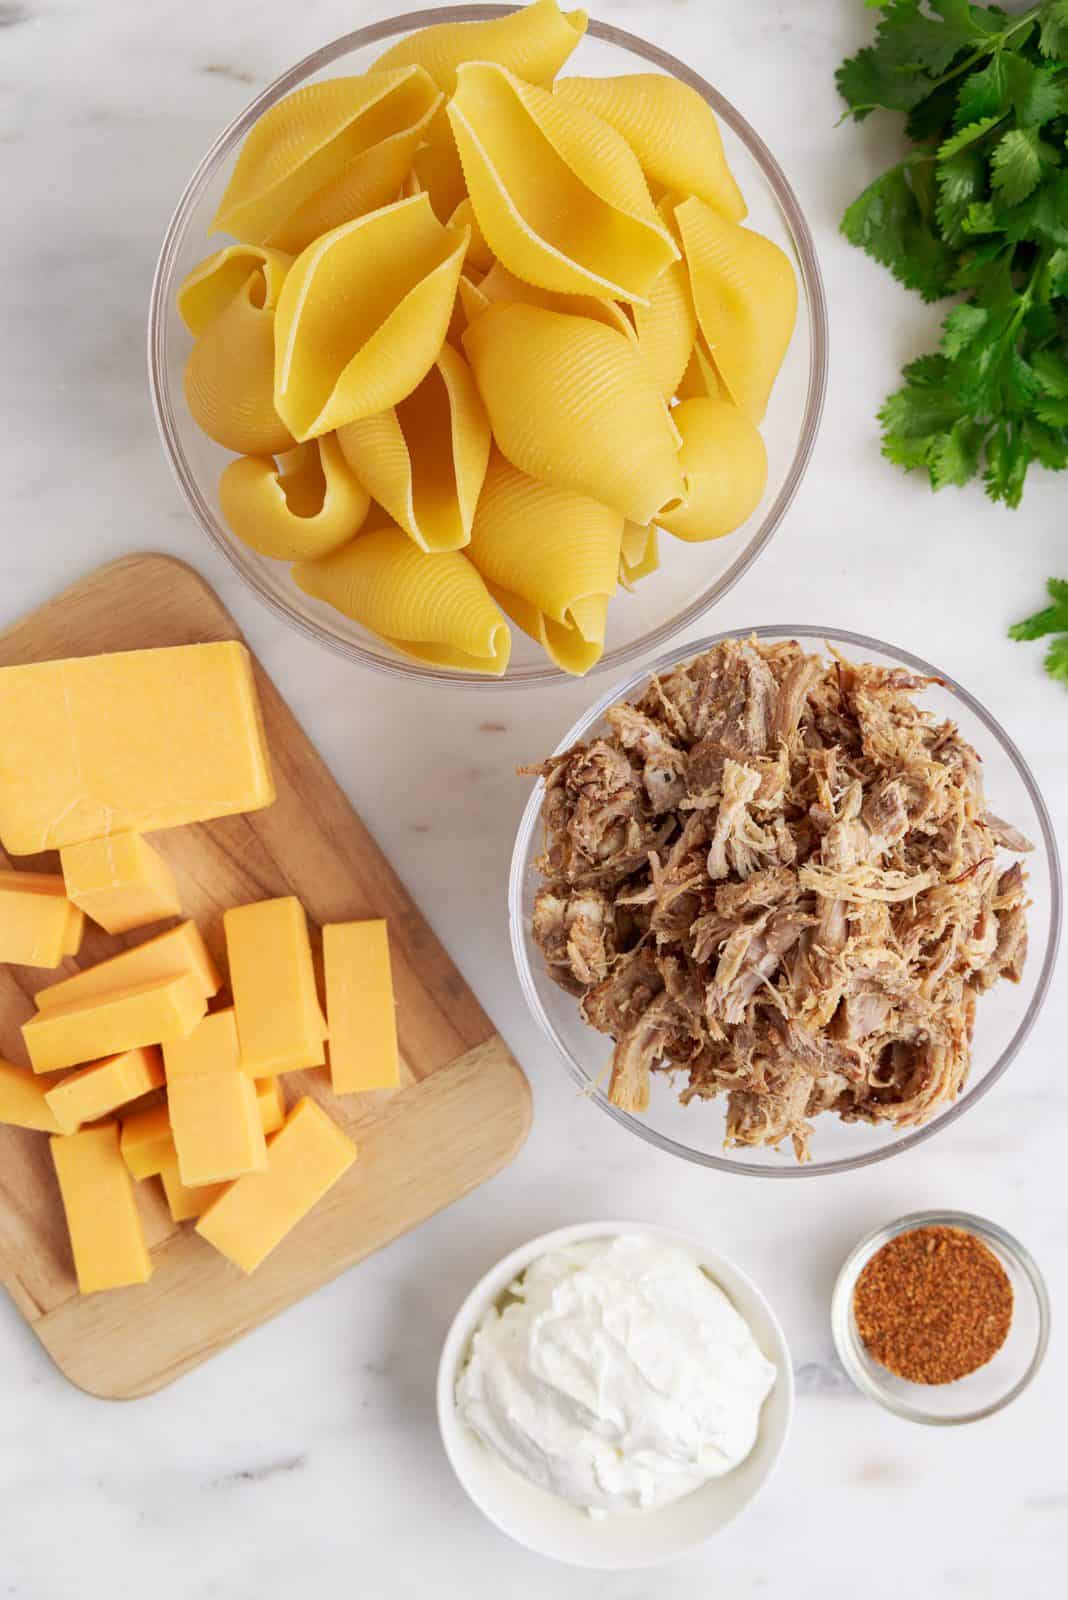 Ingredients needed: jumbo pasta shells, carnitas, cheddar cheese, sour cream and taco seasoning.